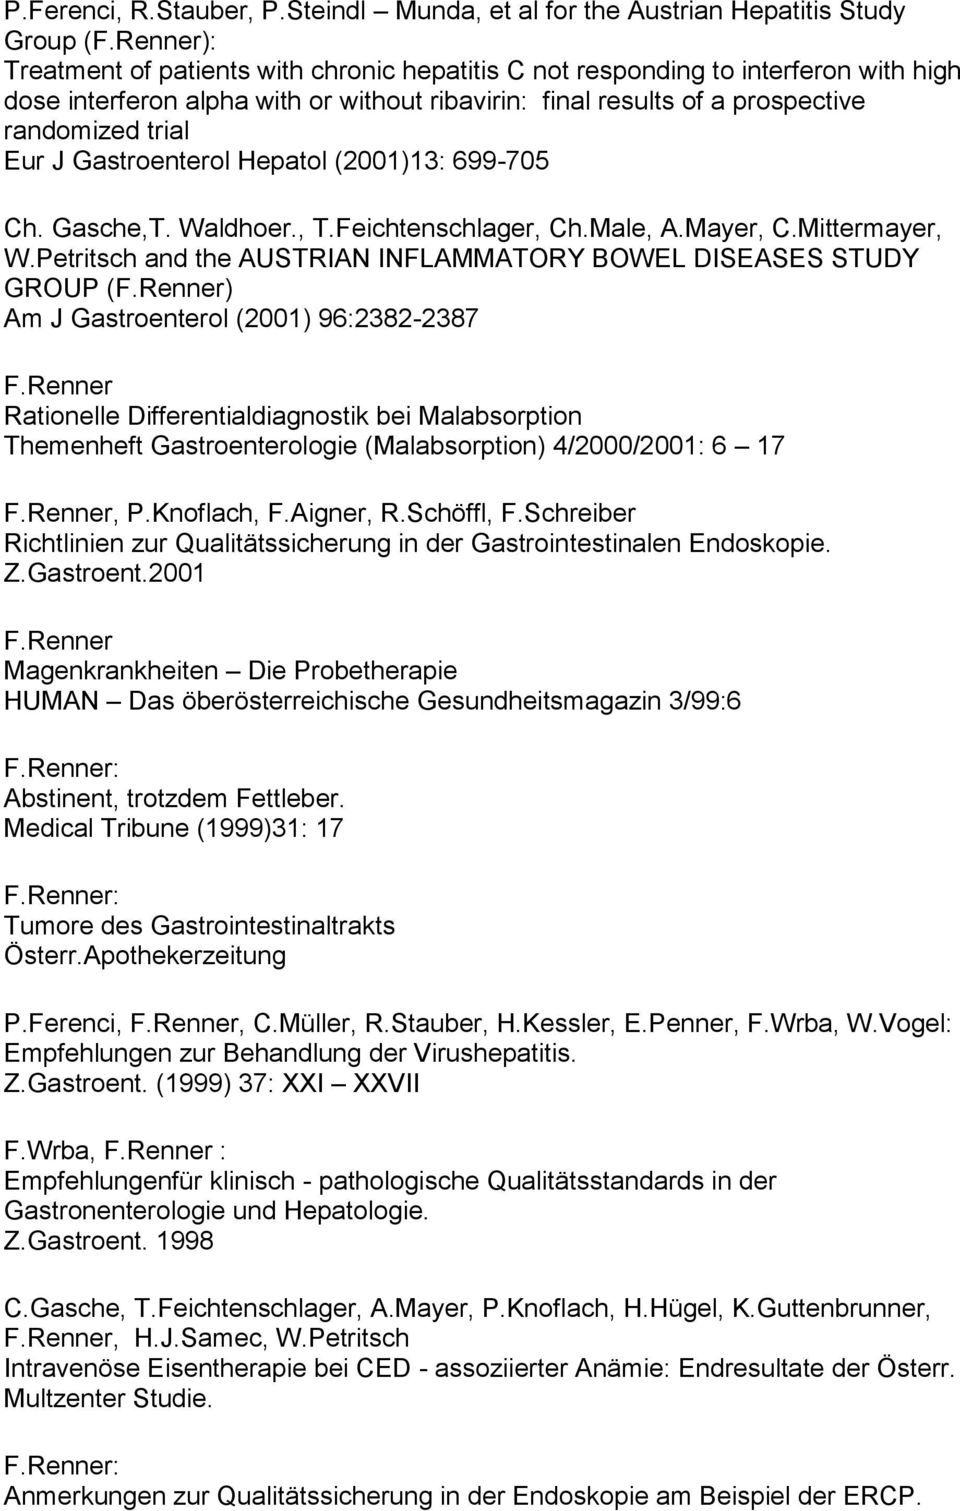 Gastroenterol Hepatol (2001)13: 699-705 Ch. Gasche,T. Waldhoer., T.Feichtenschlager, Ch.Male, A.Mayer, C.Mittermayer, W.Petritsch and the AUSTRIAN INFLAMMATORY BOWEL DISEASES STUDY GROUP (F.